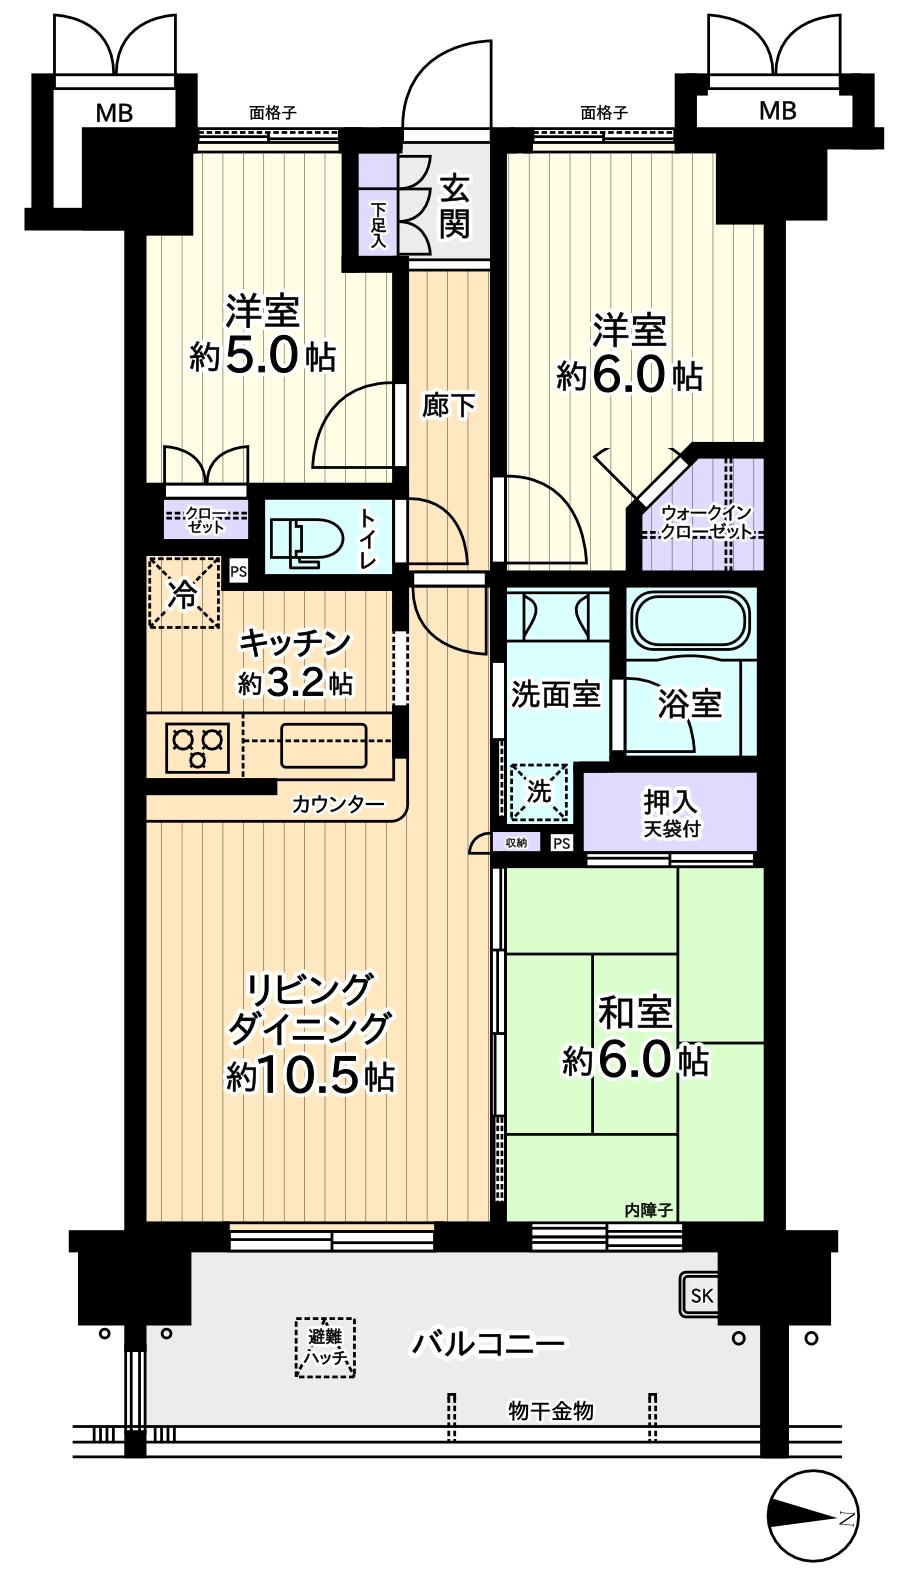 Floor plan. 3LDK, Price 18.5 million yen, Occupied area 65.19 sq m , Balcony area 12.3 sq m